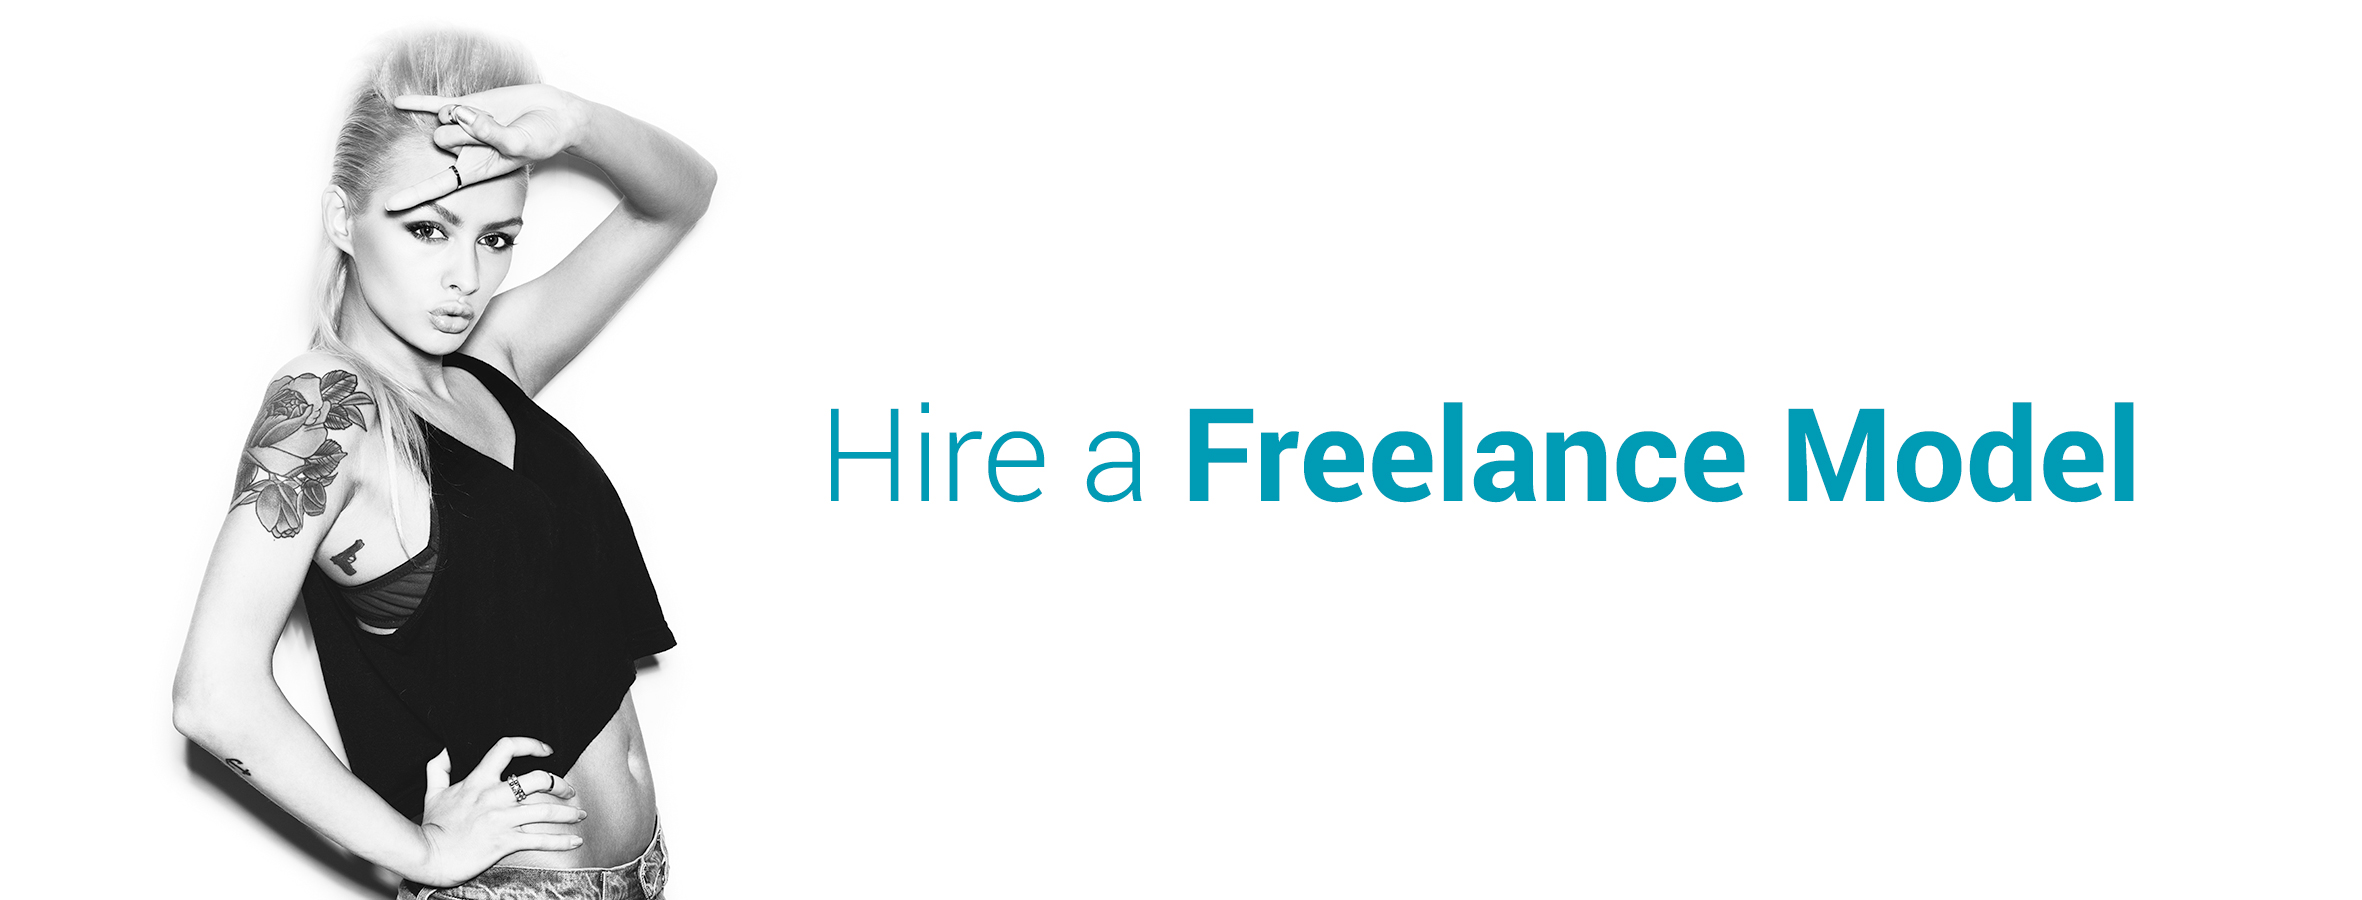 Hire a Freelance Model